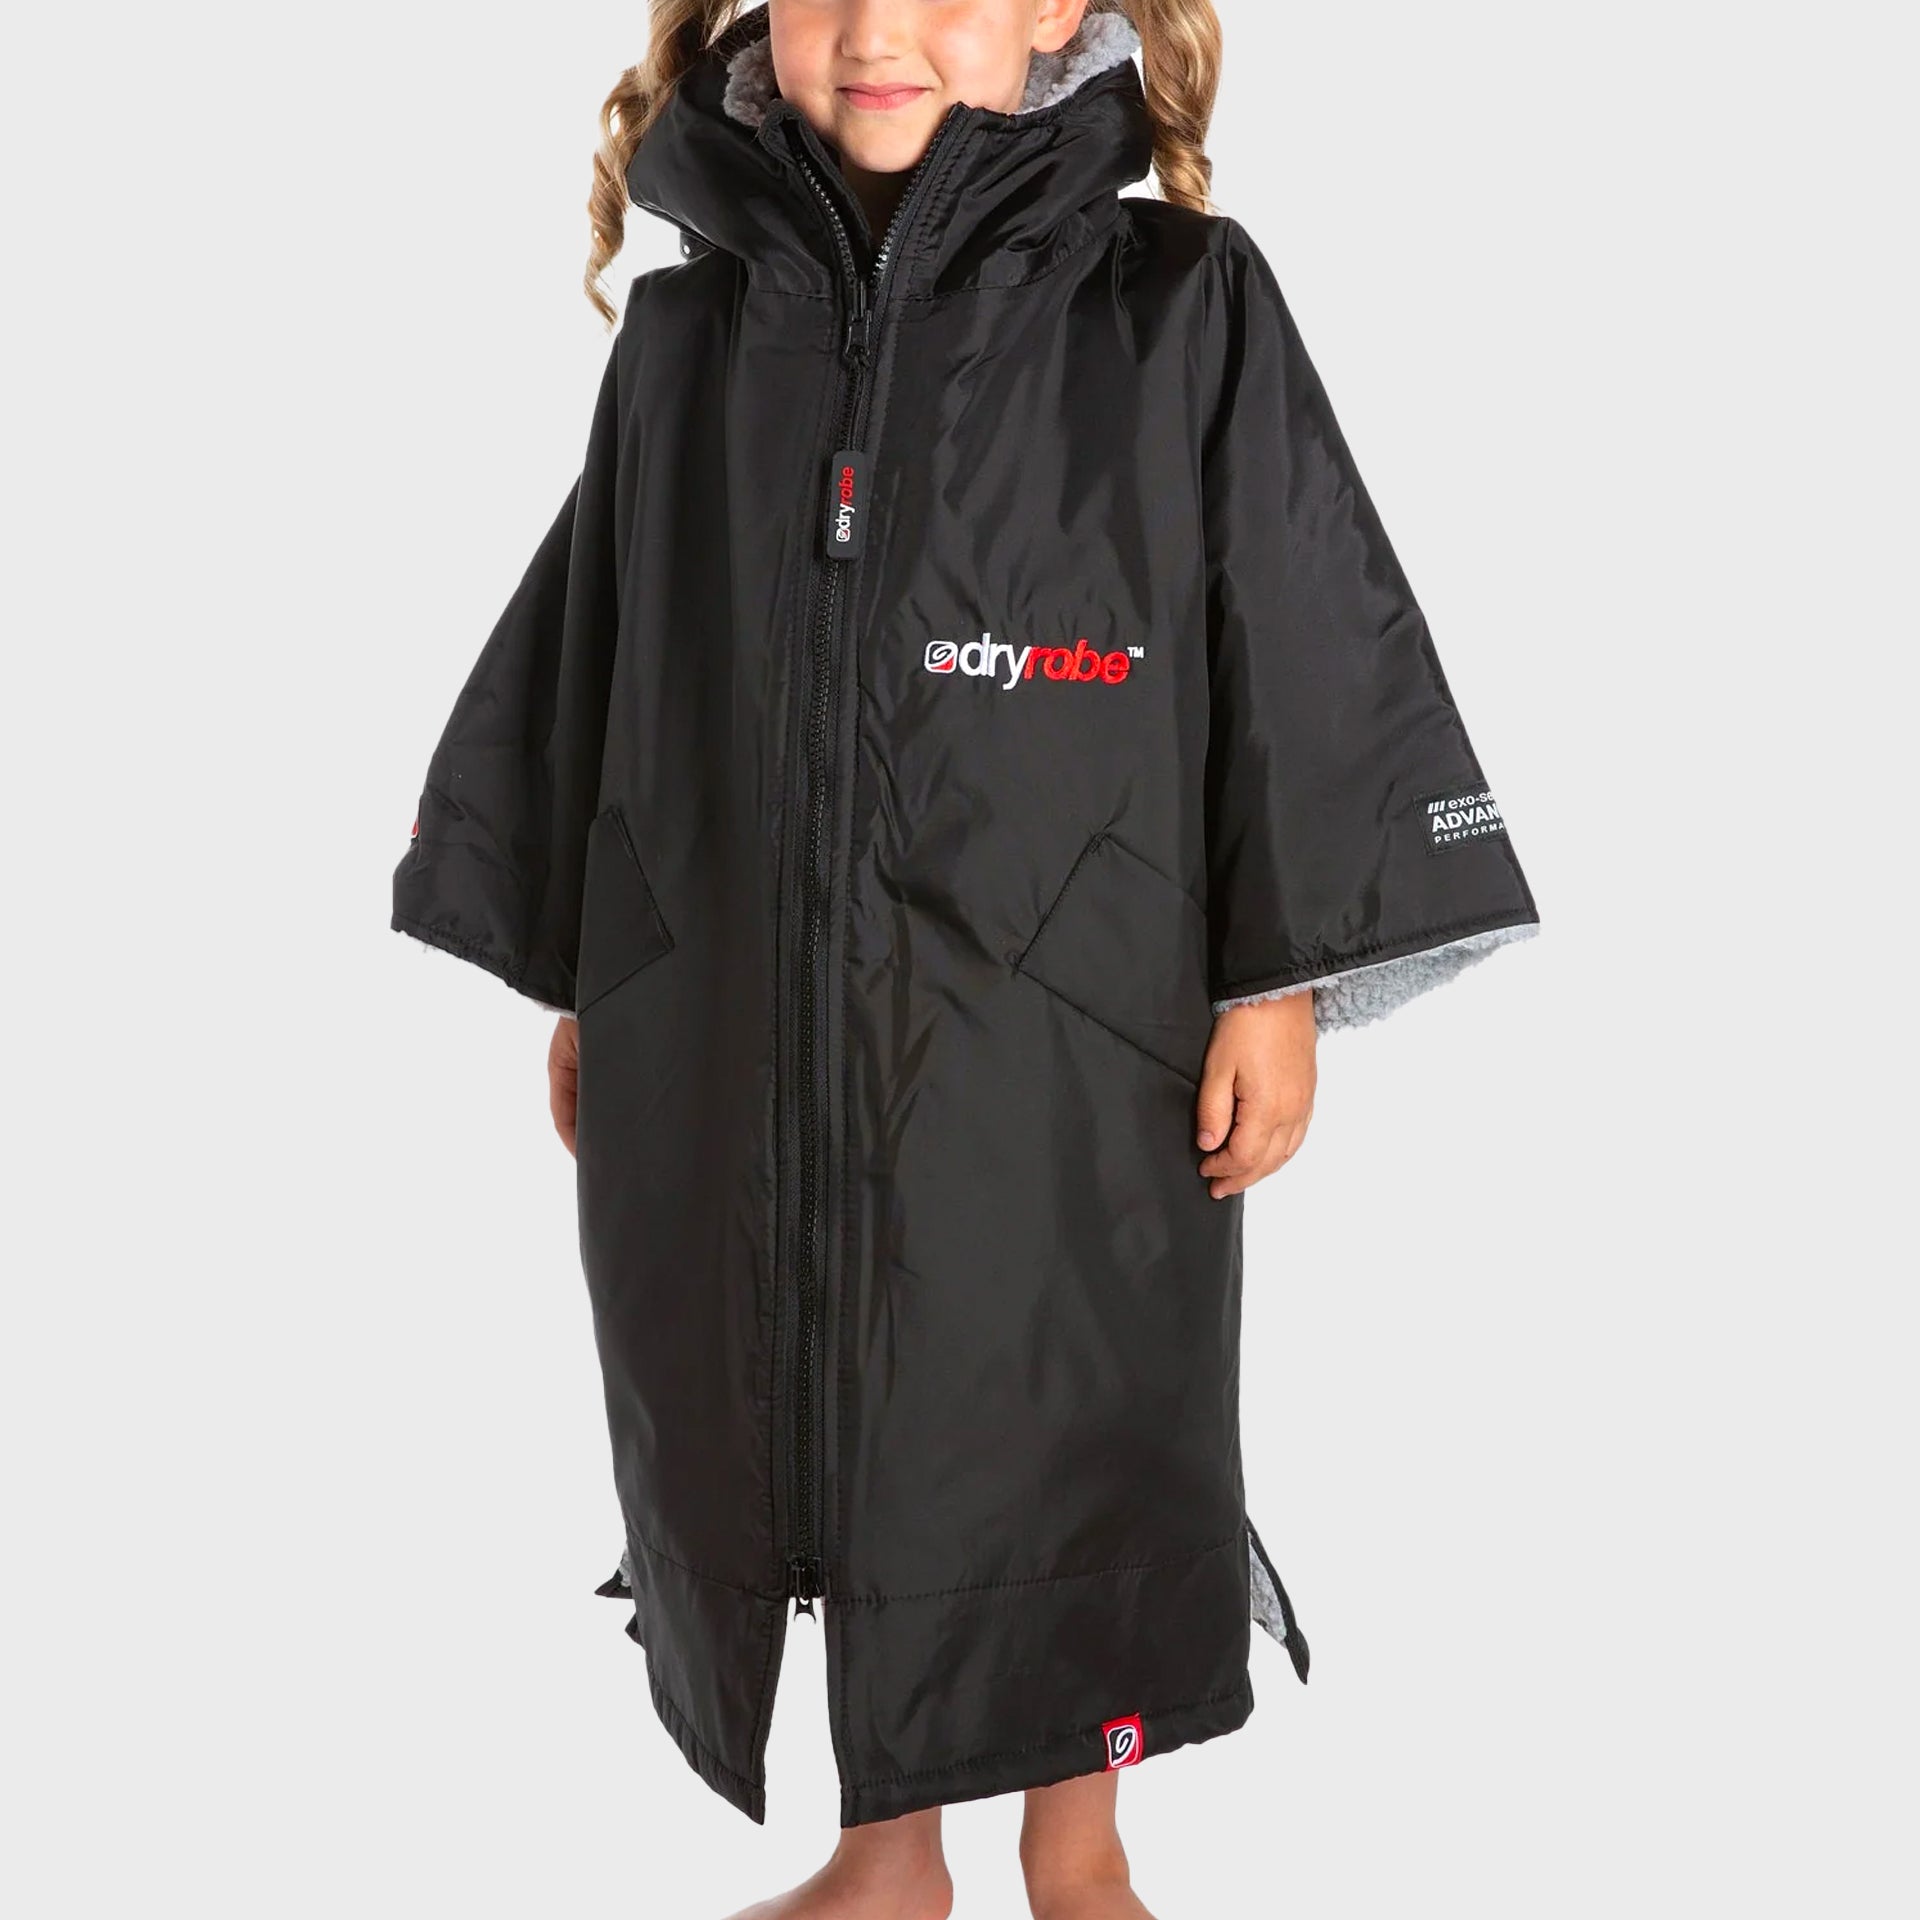 Dryrobe Advance Kids Short Sleeve Dryrobe (5-9 Years) - Black/Grey - ManGo Surfing